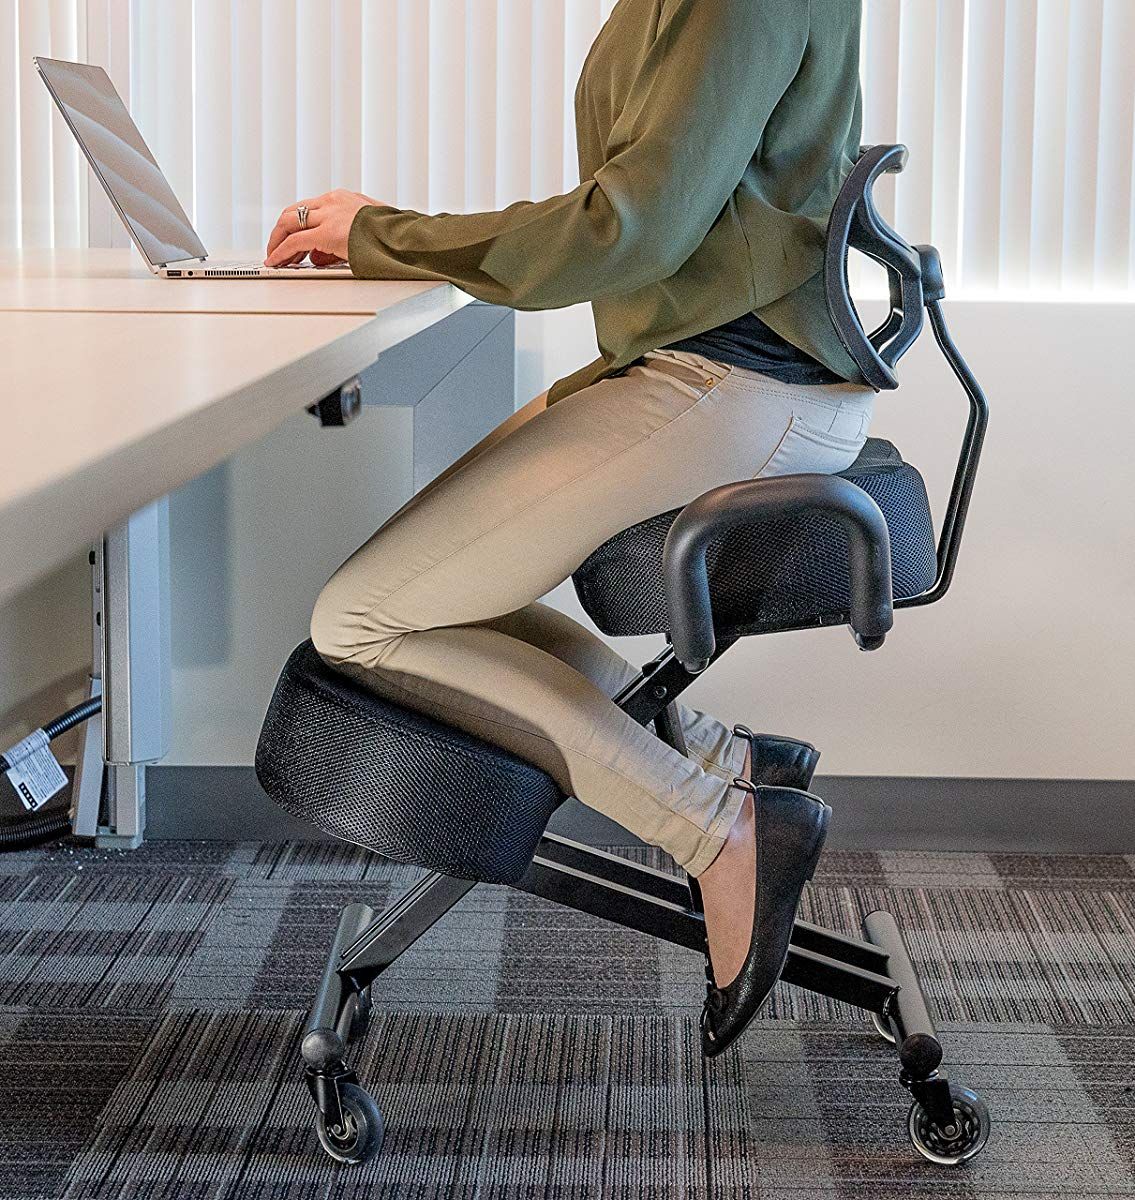 Buy Sleekform Kneeling Chair for Perfect Posture | Ergonomic Knee Stool